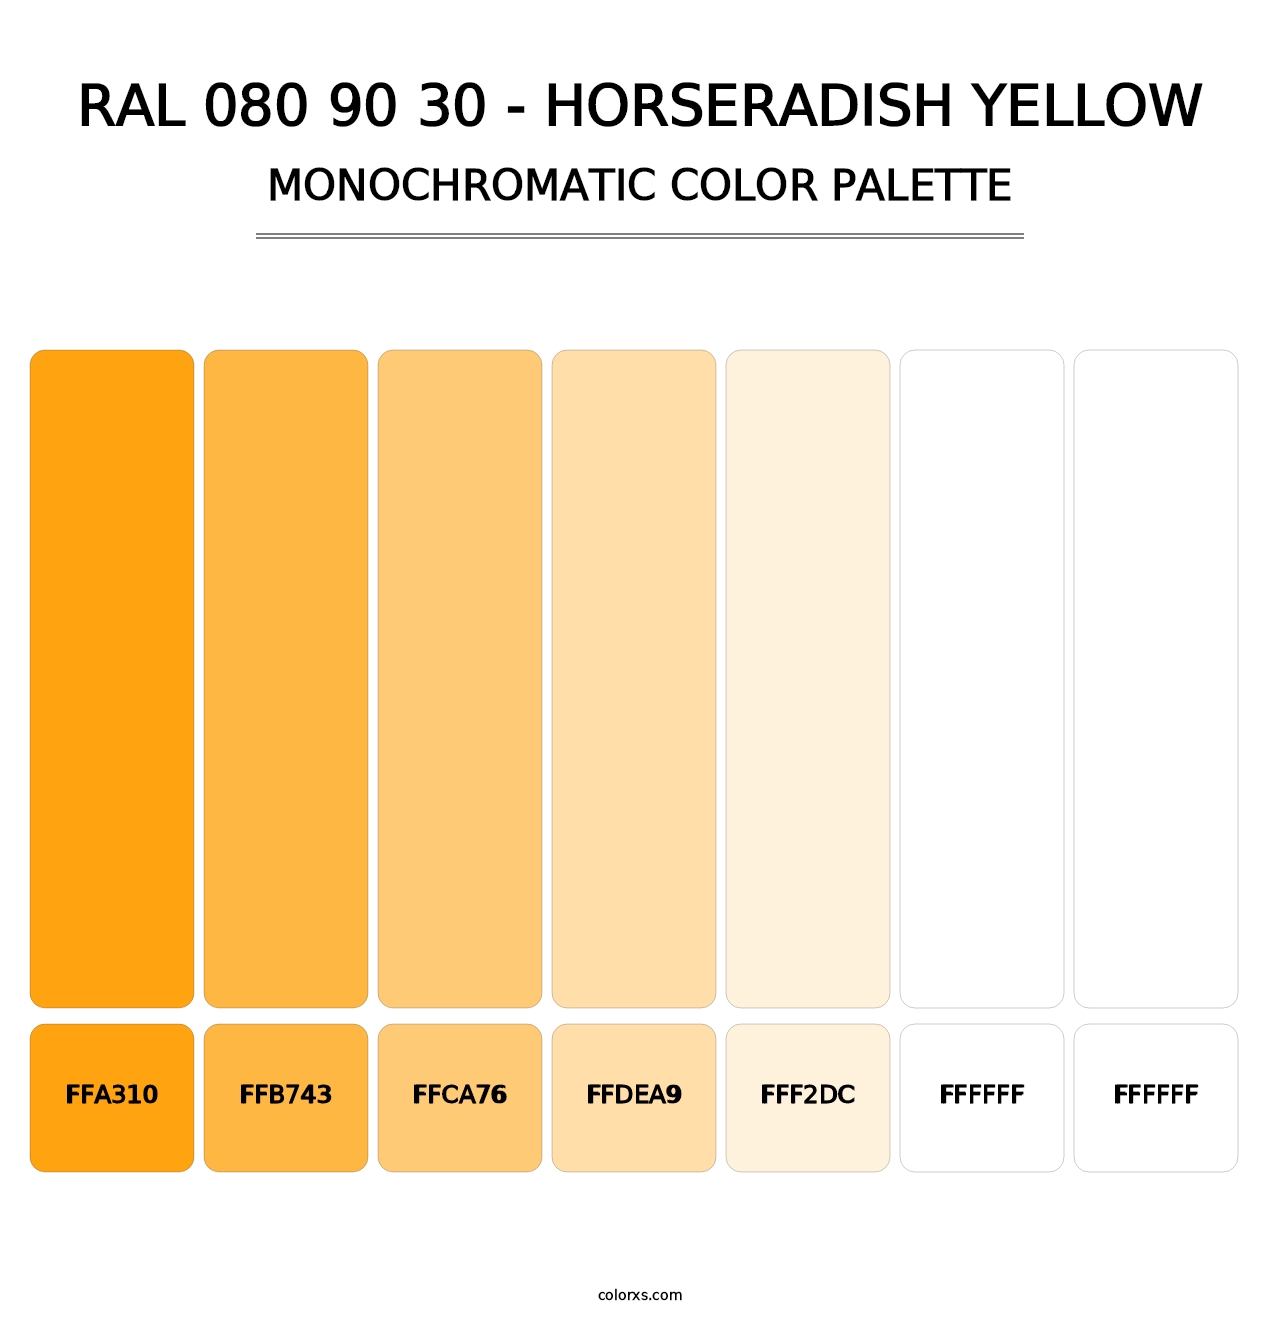 RAL 080 90 30 - Horseradish Yellow - Monochromatic Color Palette